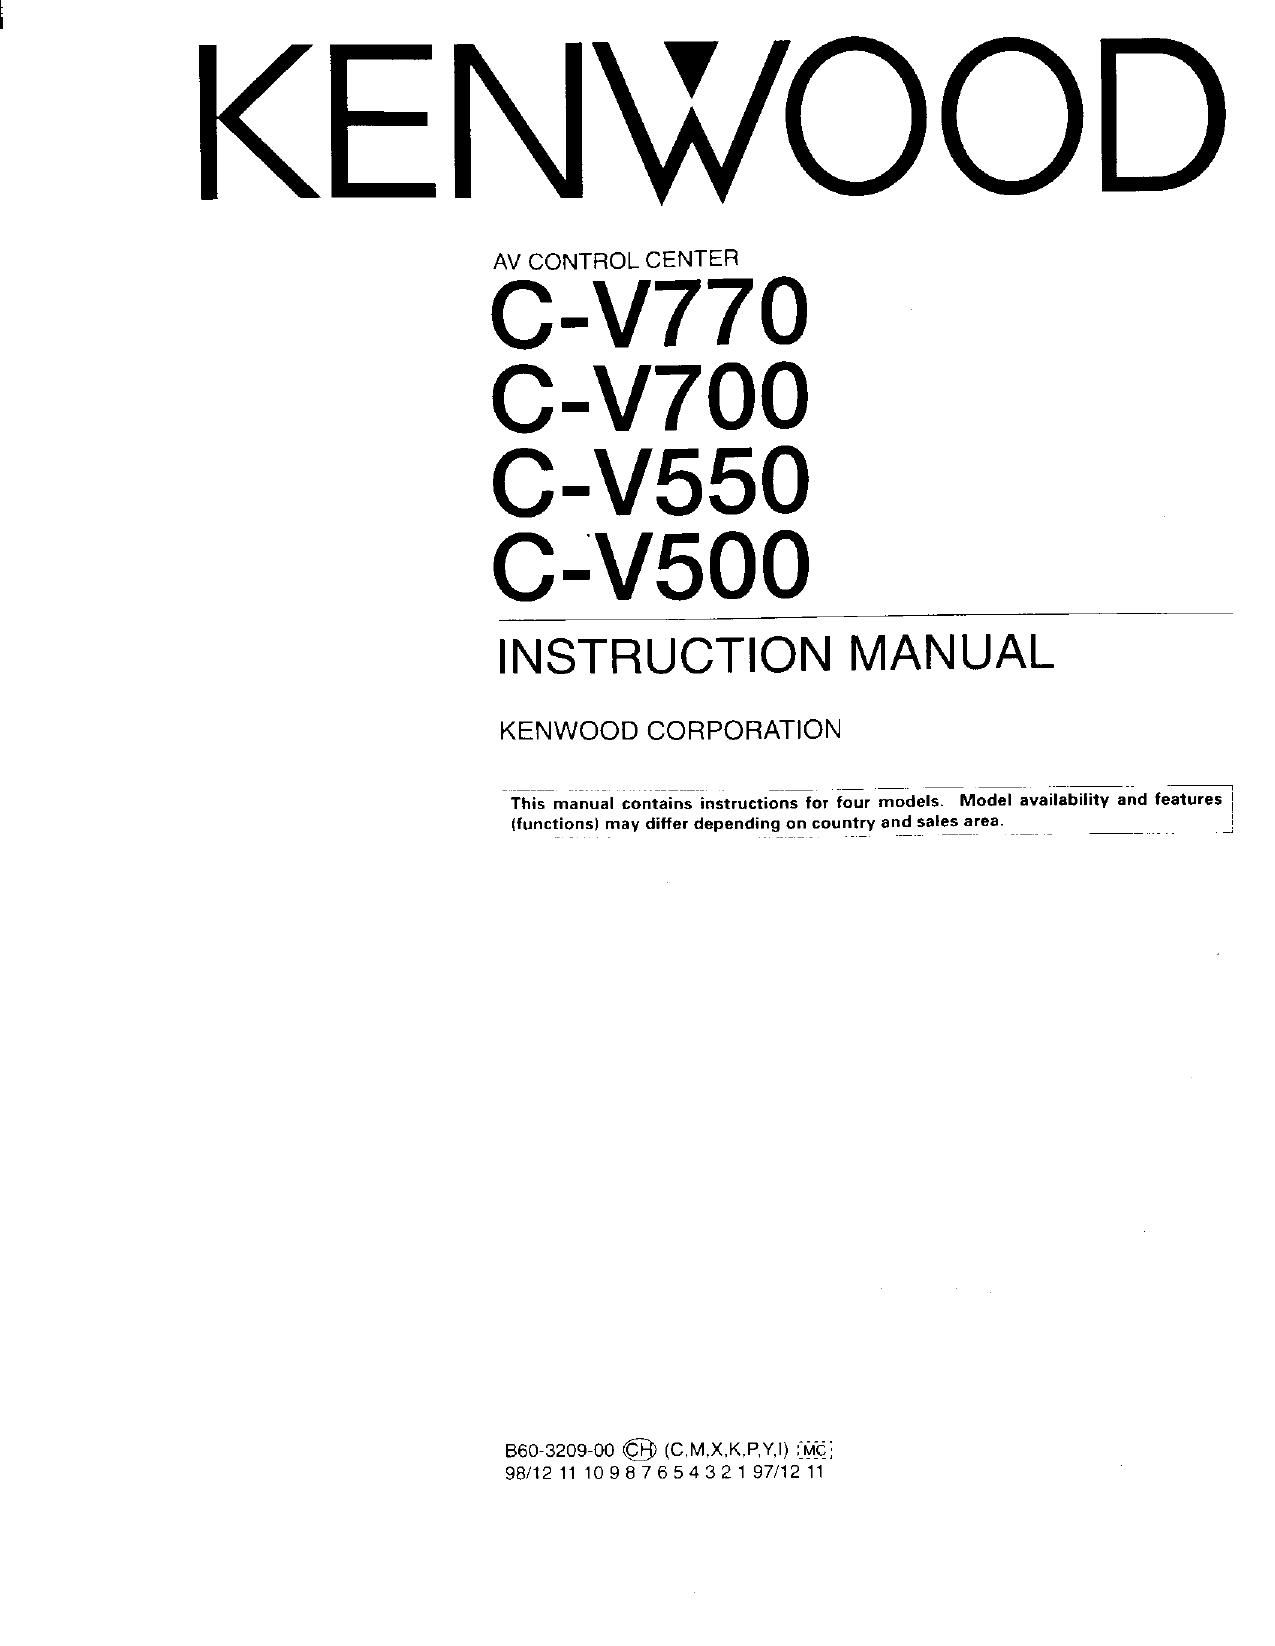 Kenwood CV 500 Owners Manual